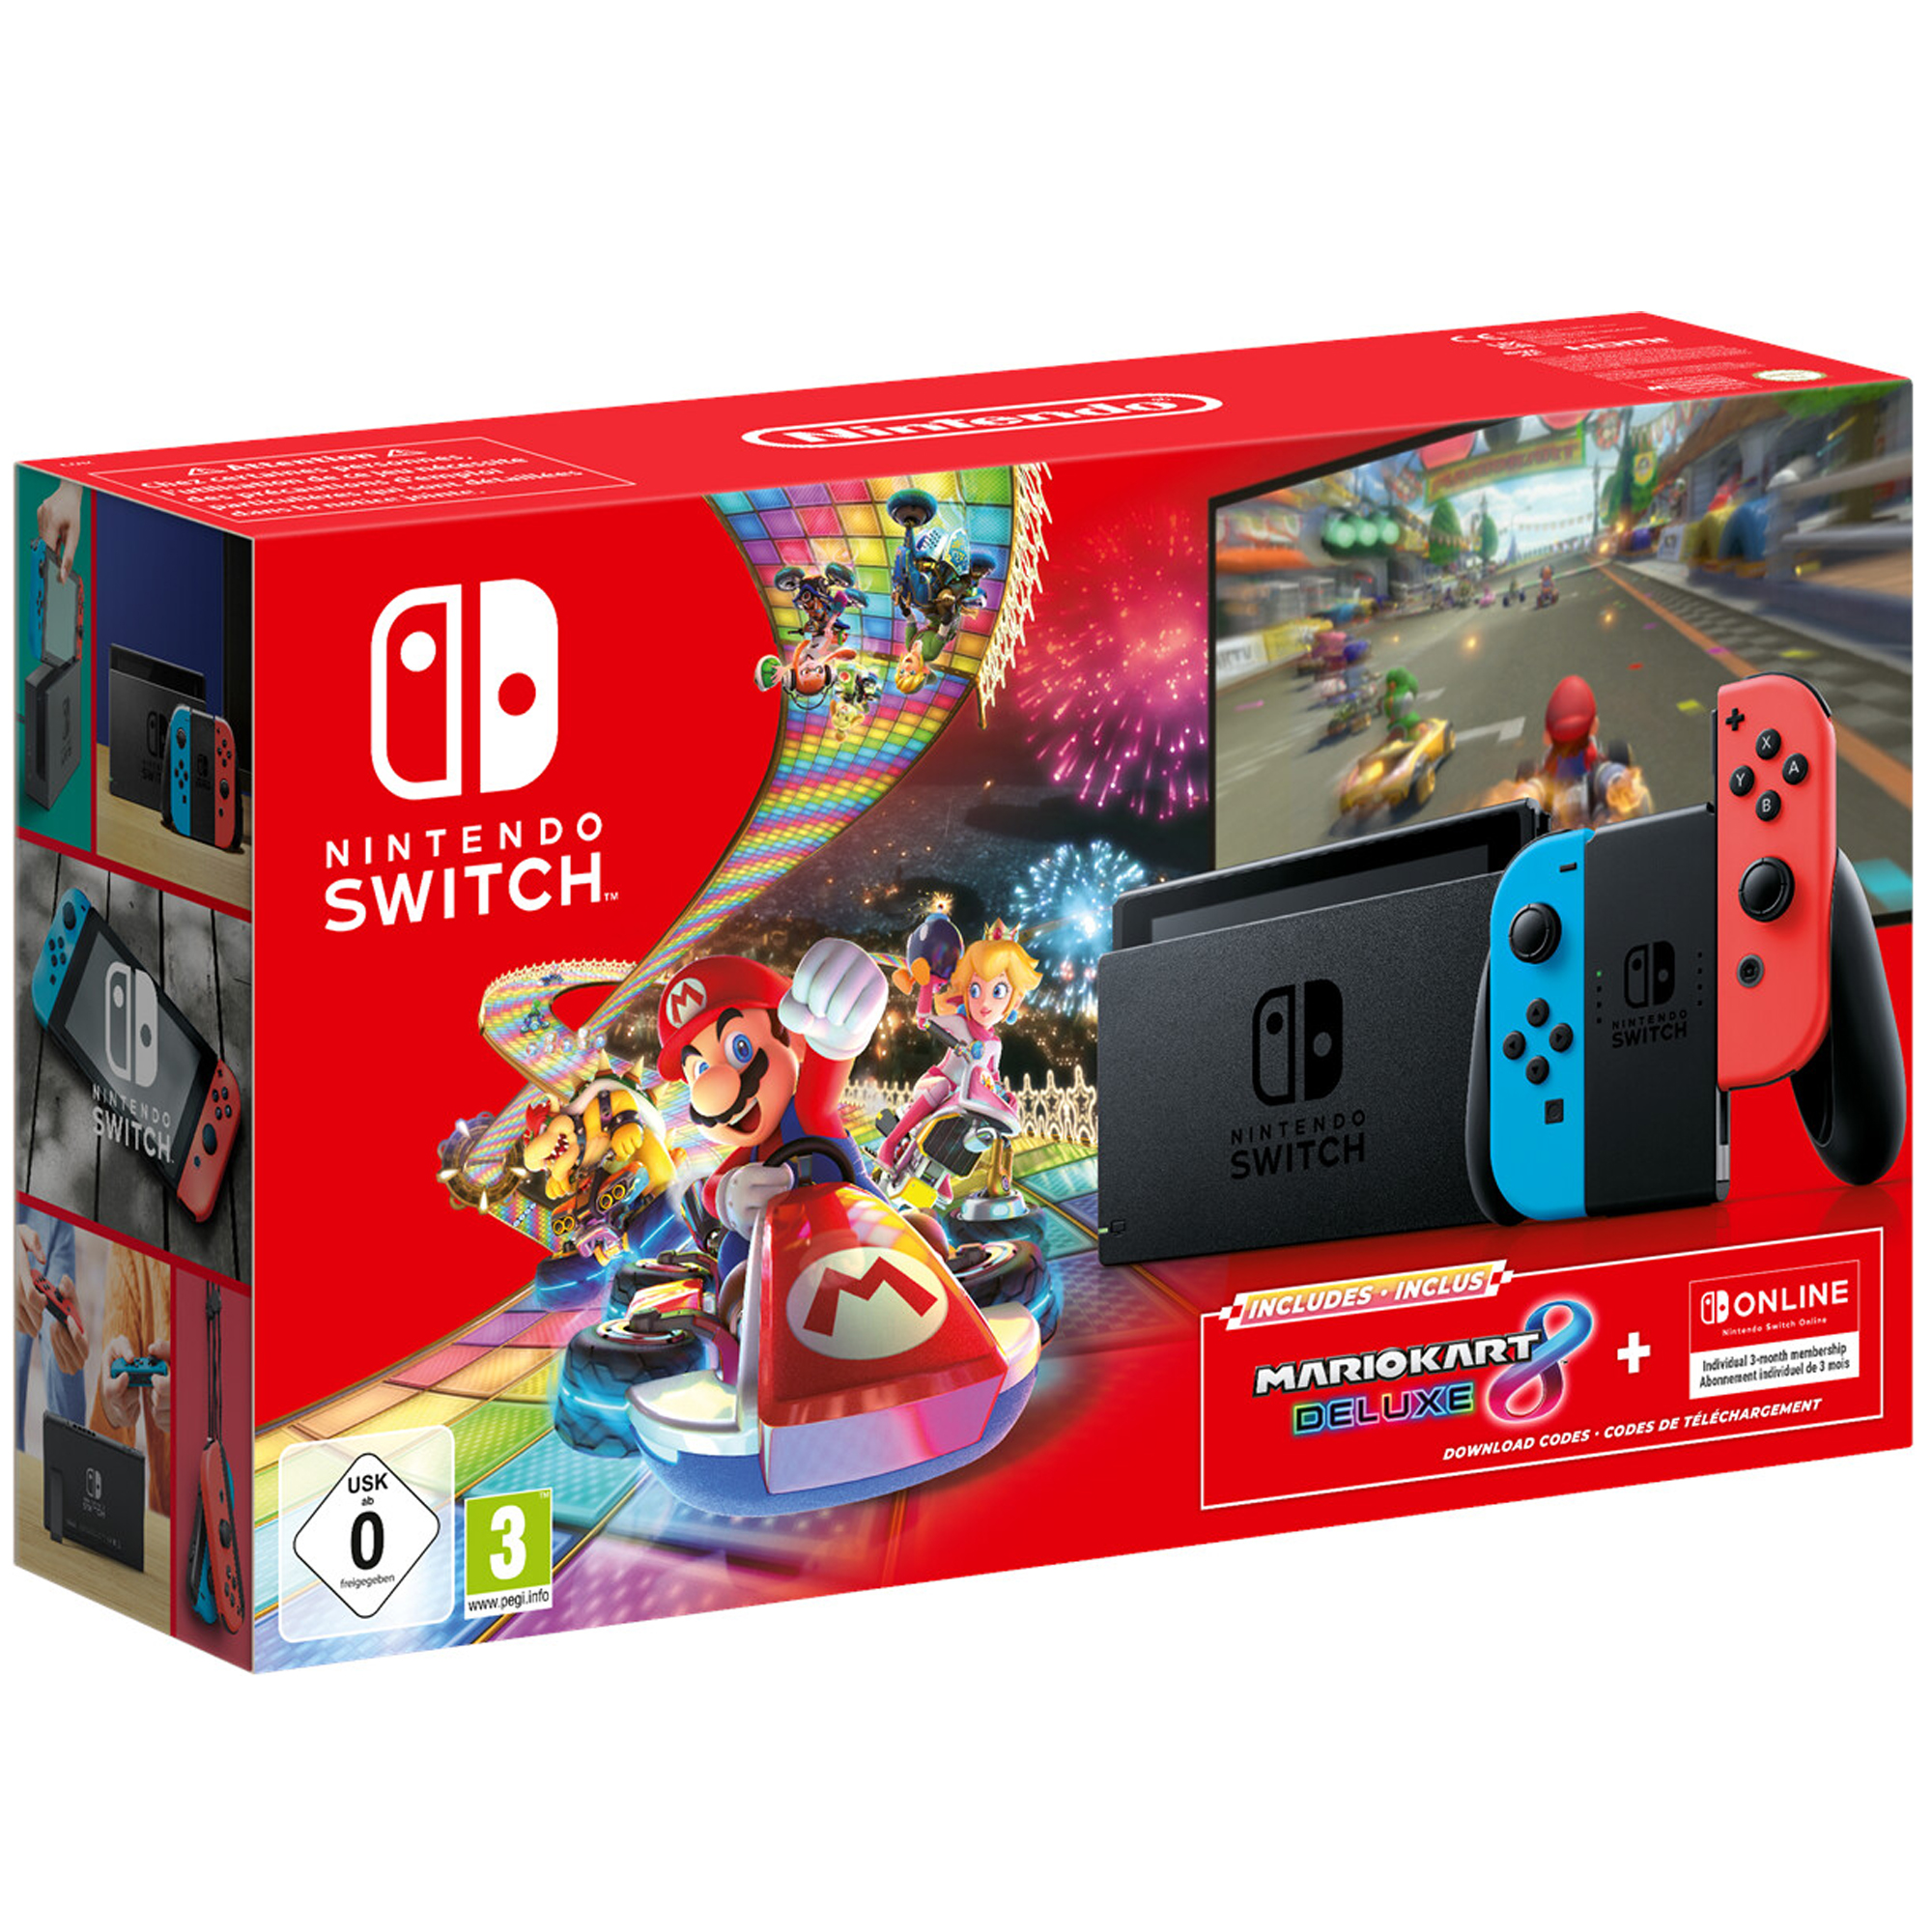 Neon-Rot/Neon-Blau Nintendo inkl. Switch